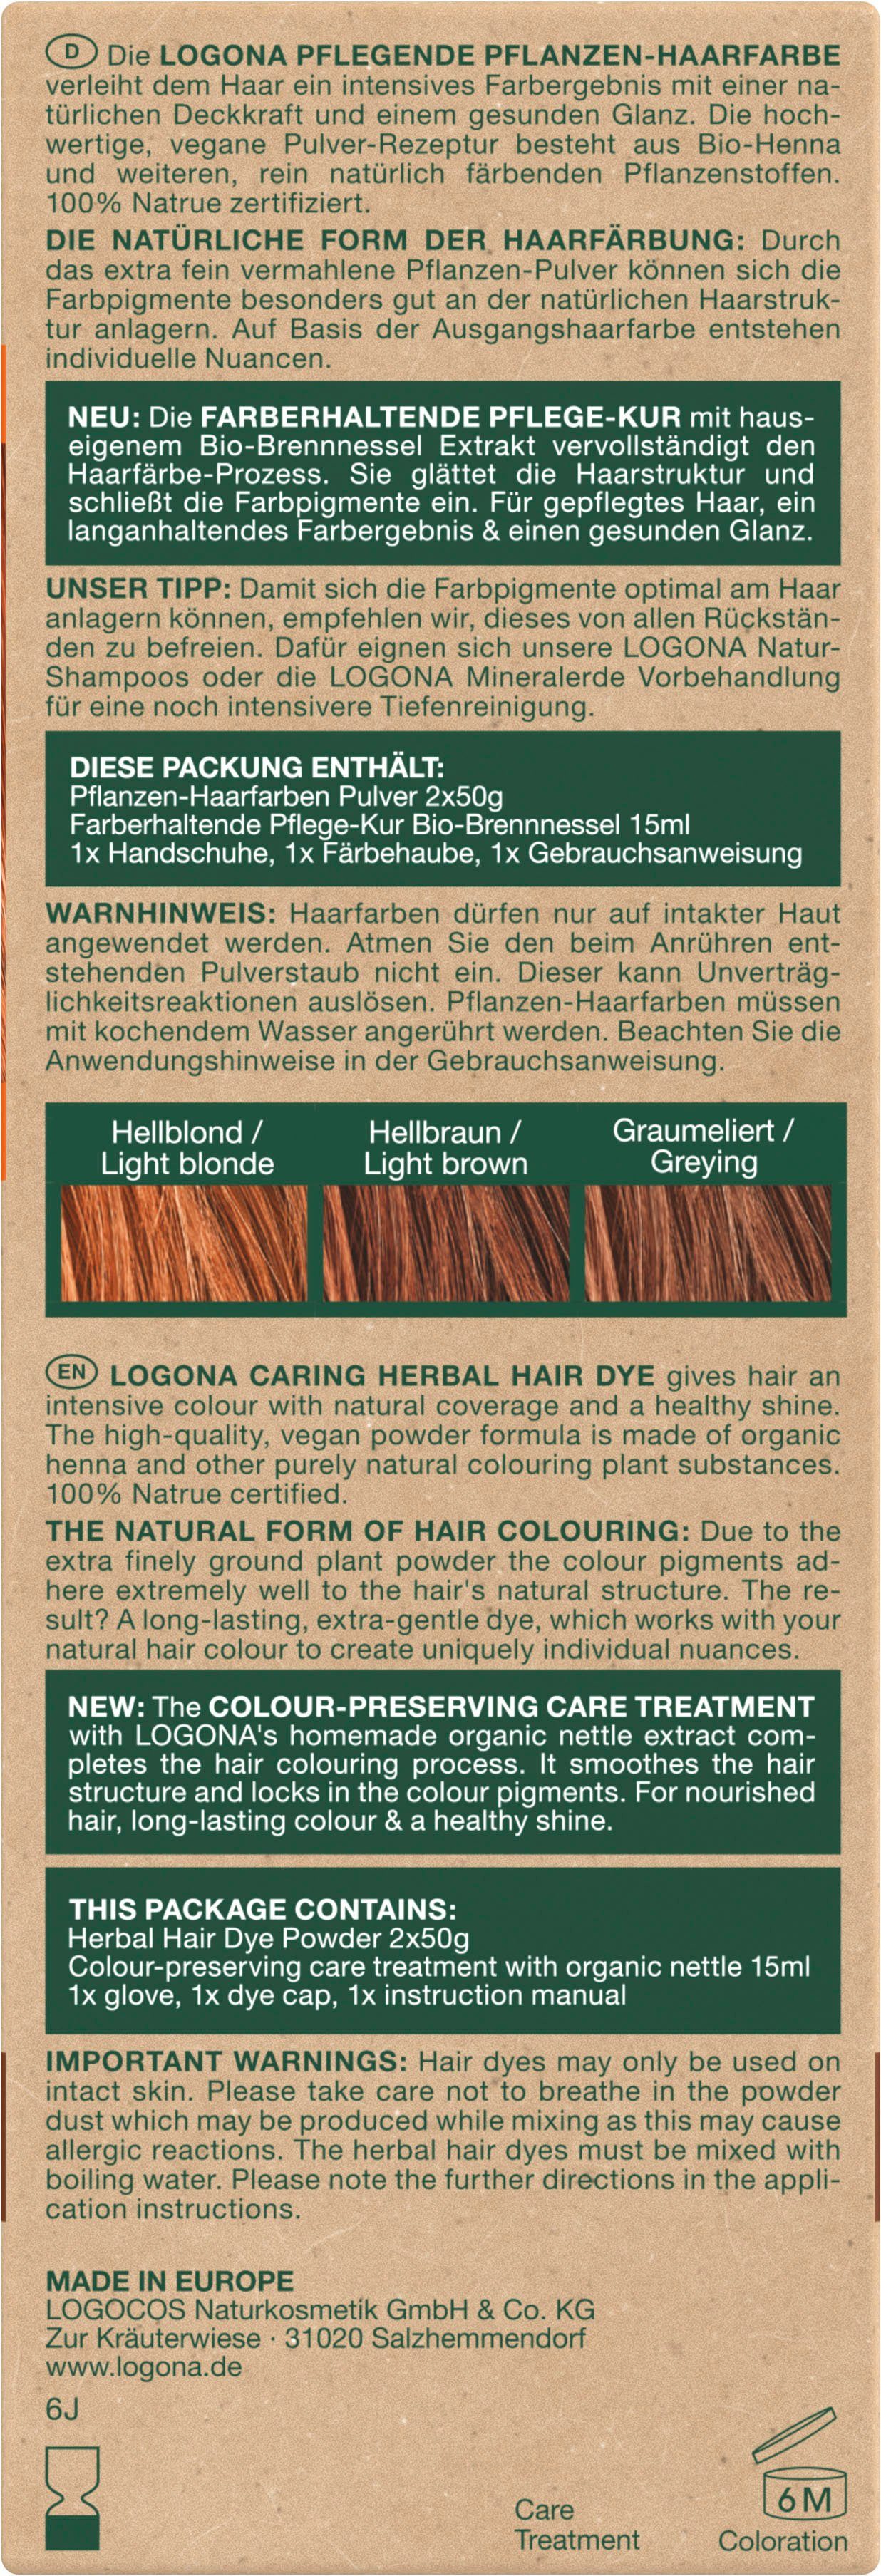 Haarfarbe Flammenrot 03 Pulver Pflanzen-Haarfarbe LOGONA